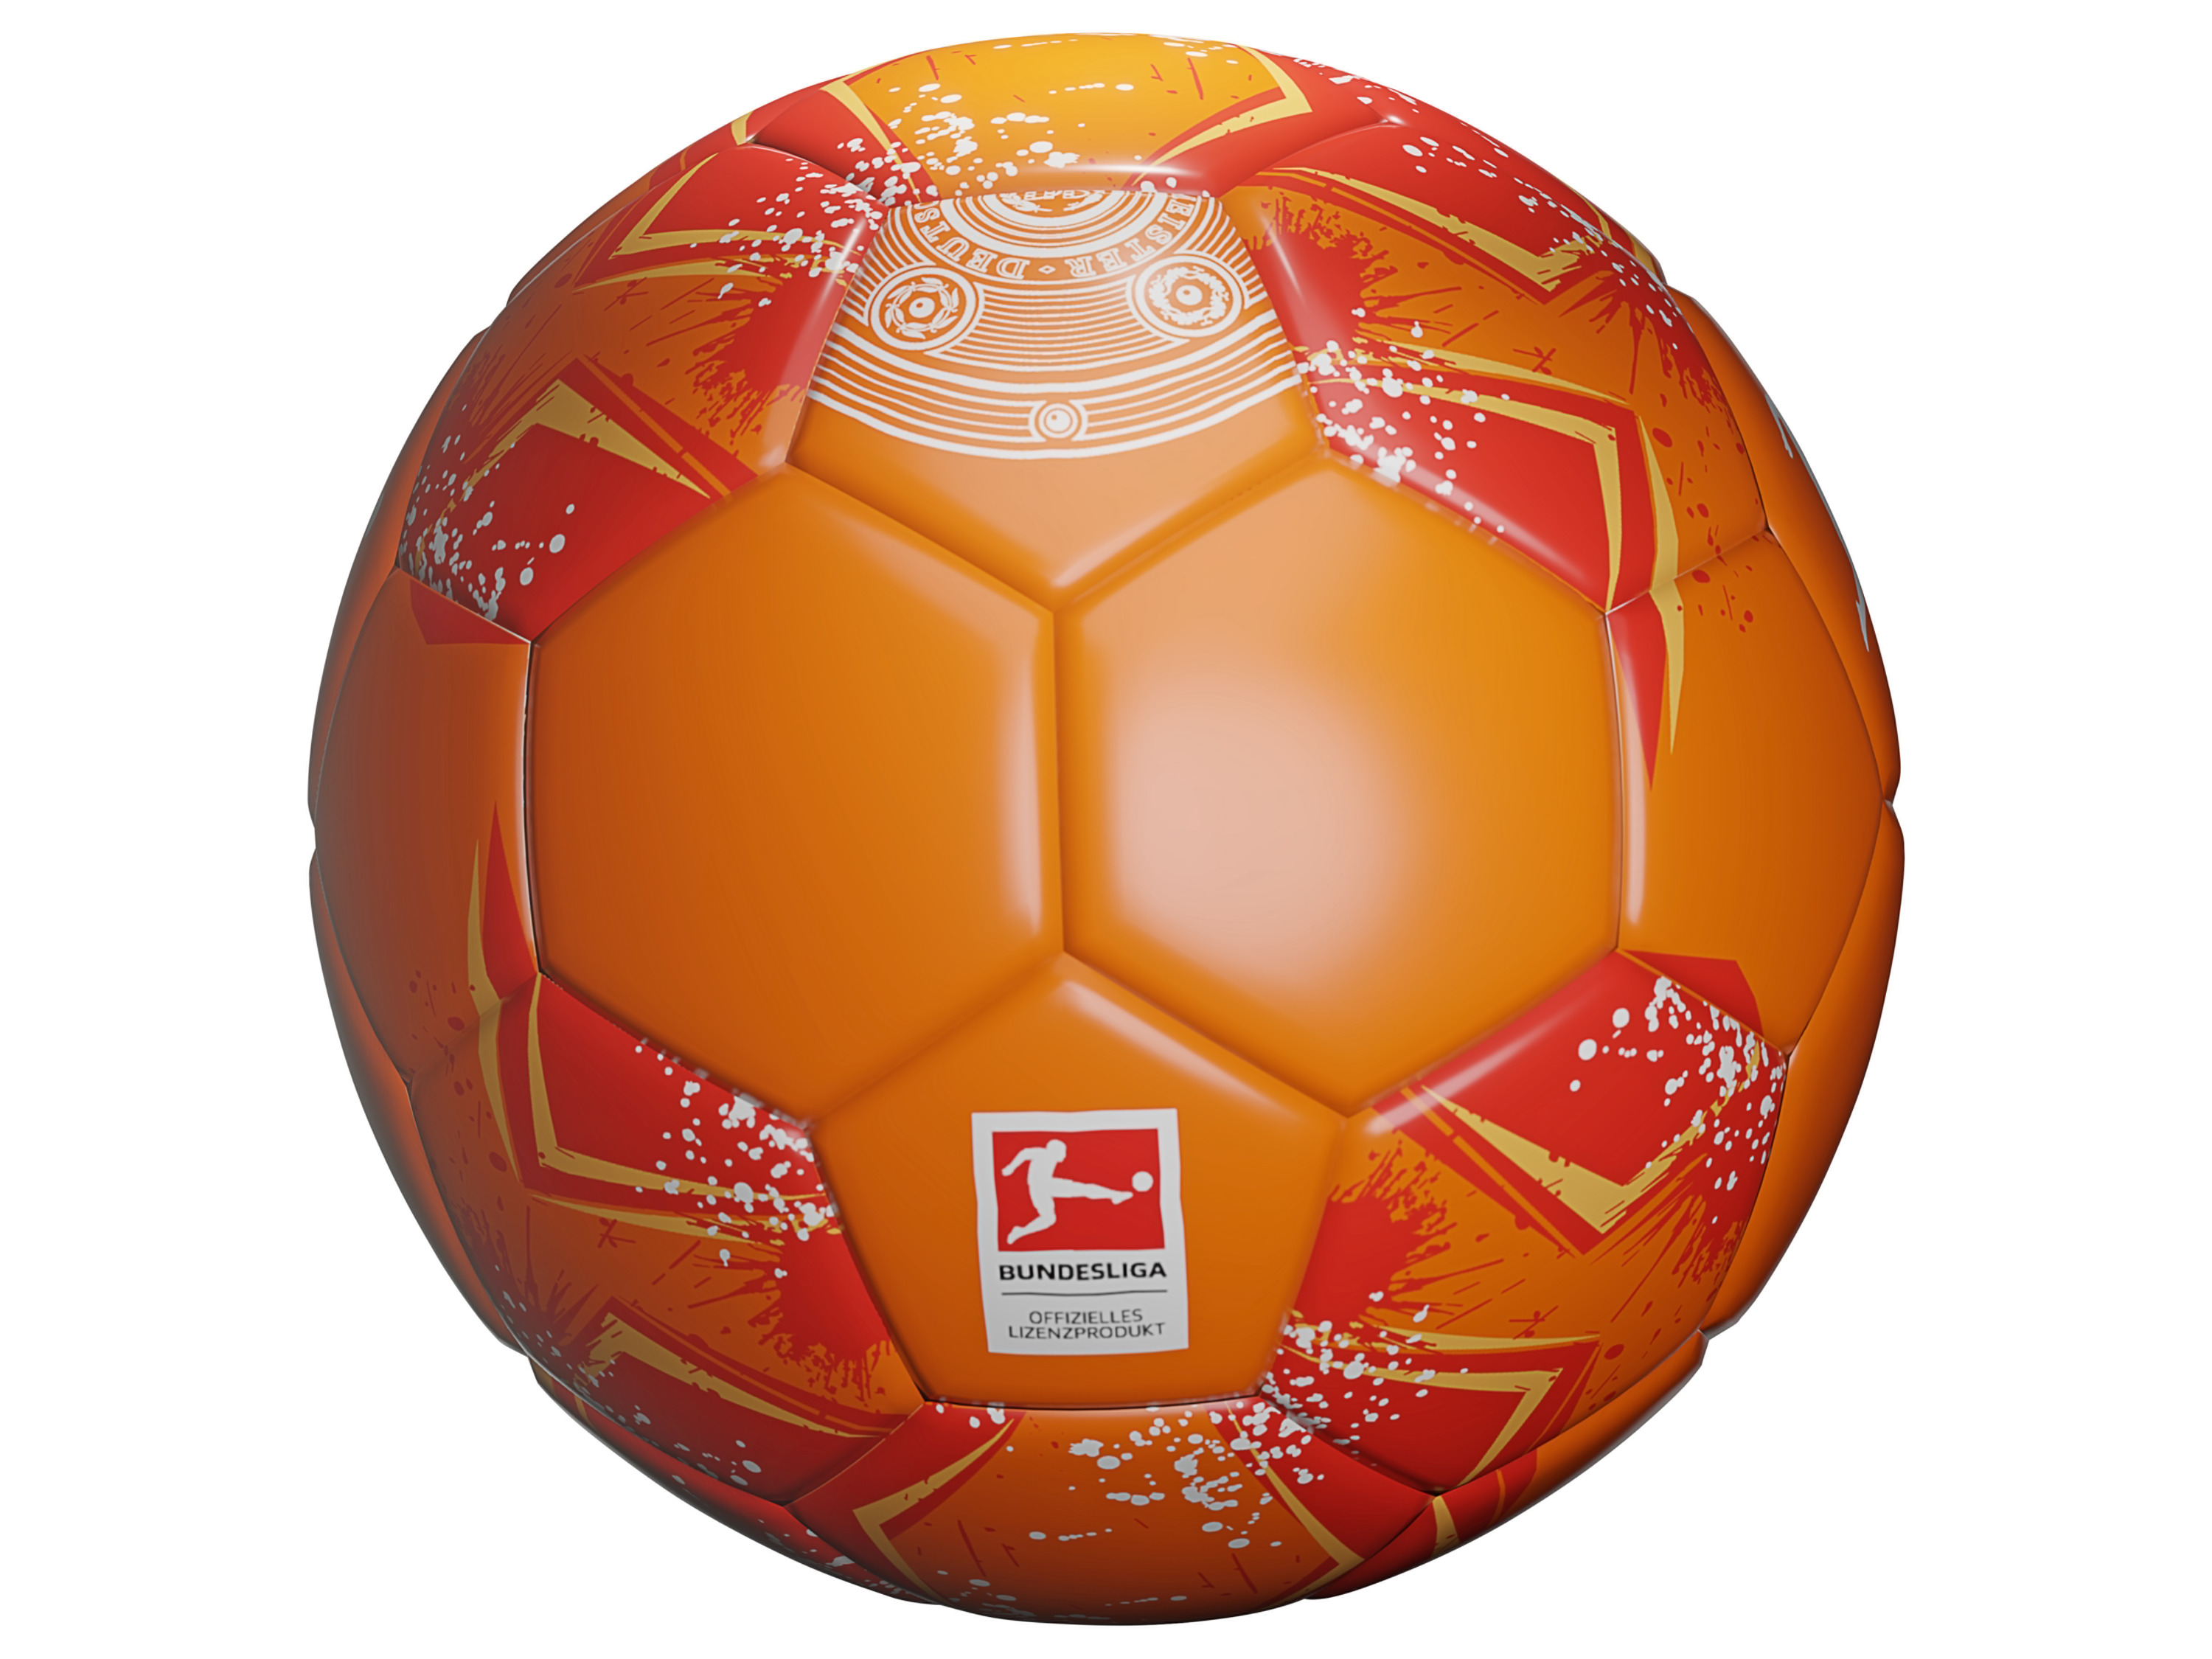 Bundesliga Fußball S24 (orange/rot/weiß)